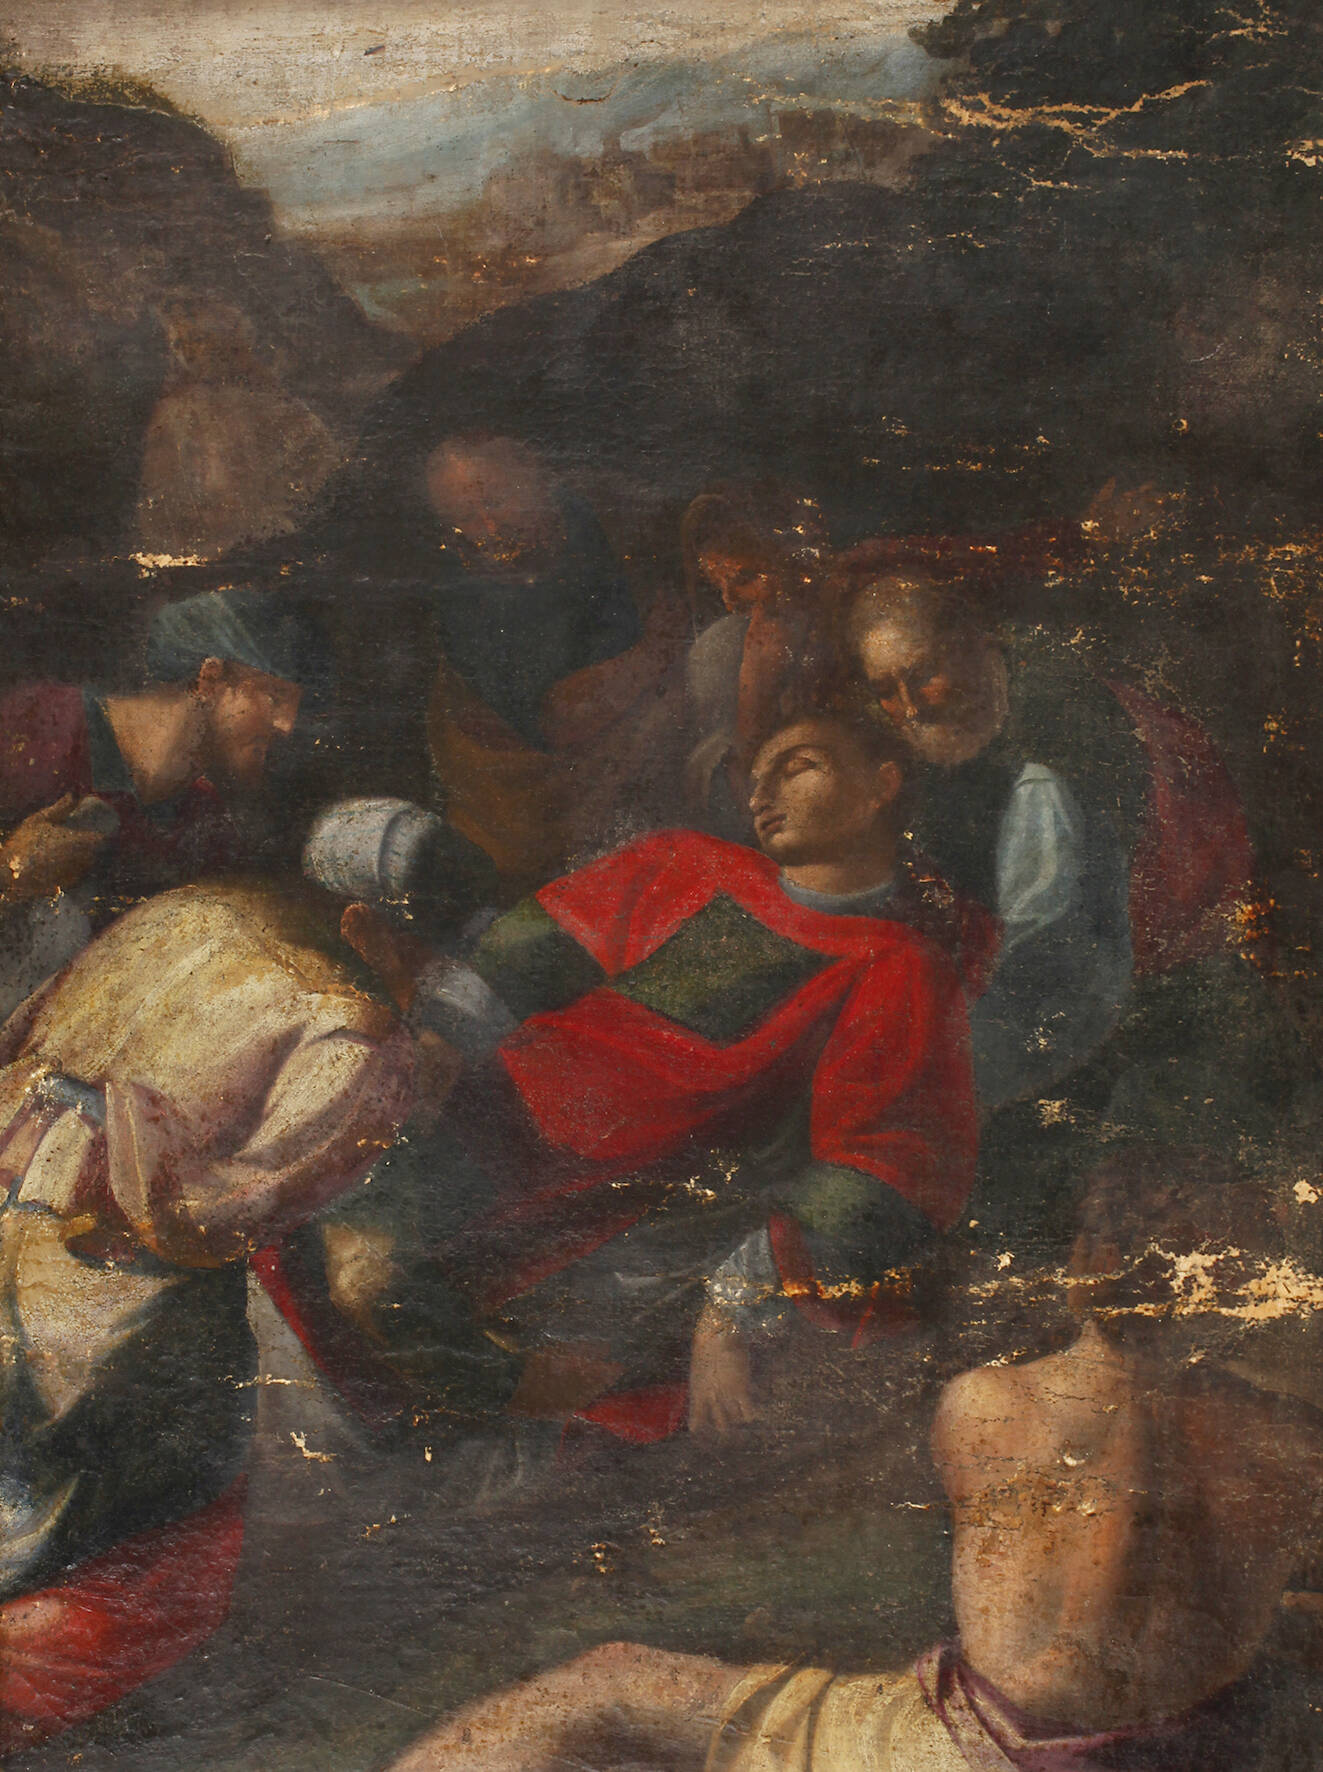 Das Martyrium des heiligen Stephanus